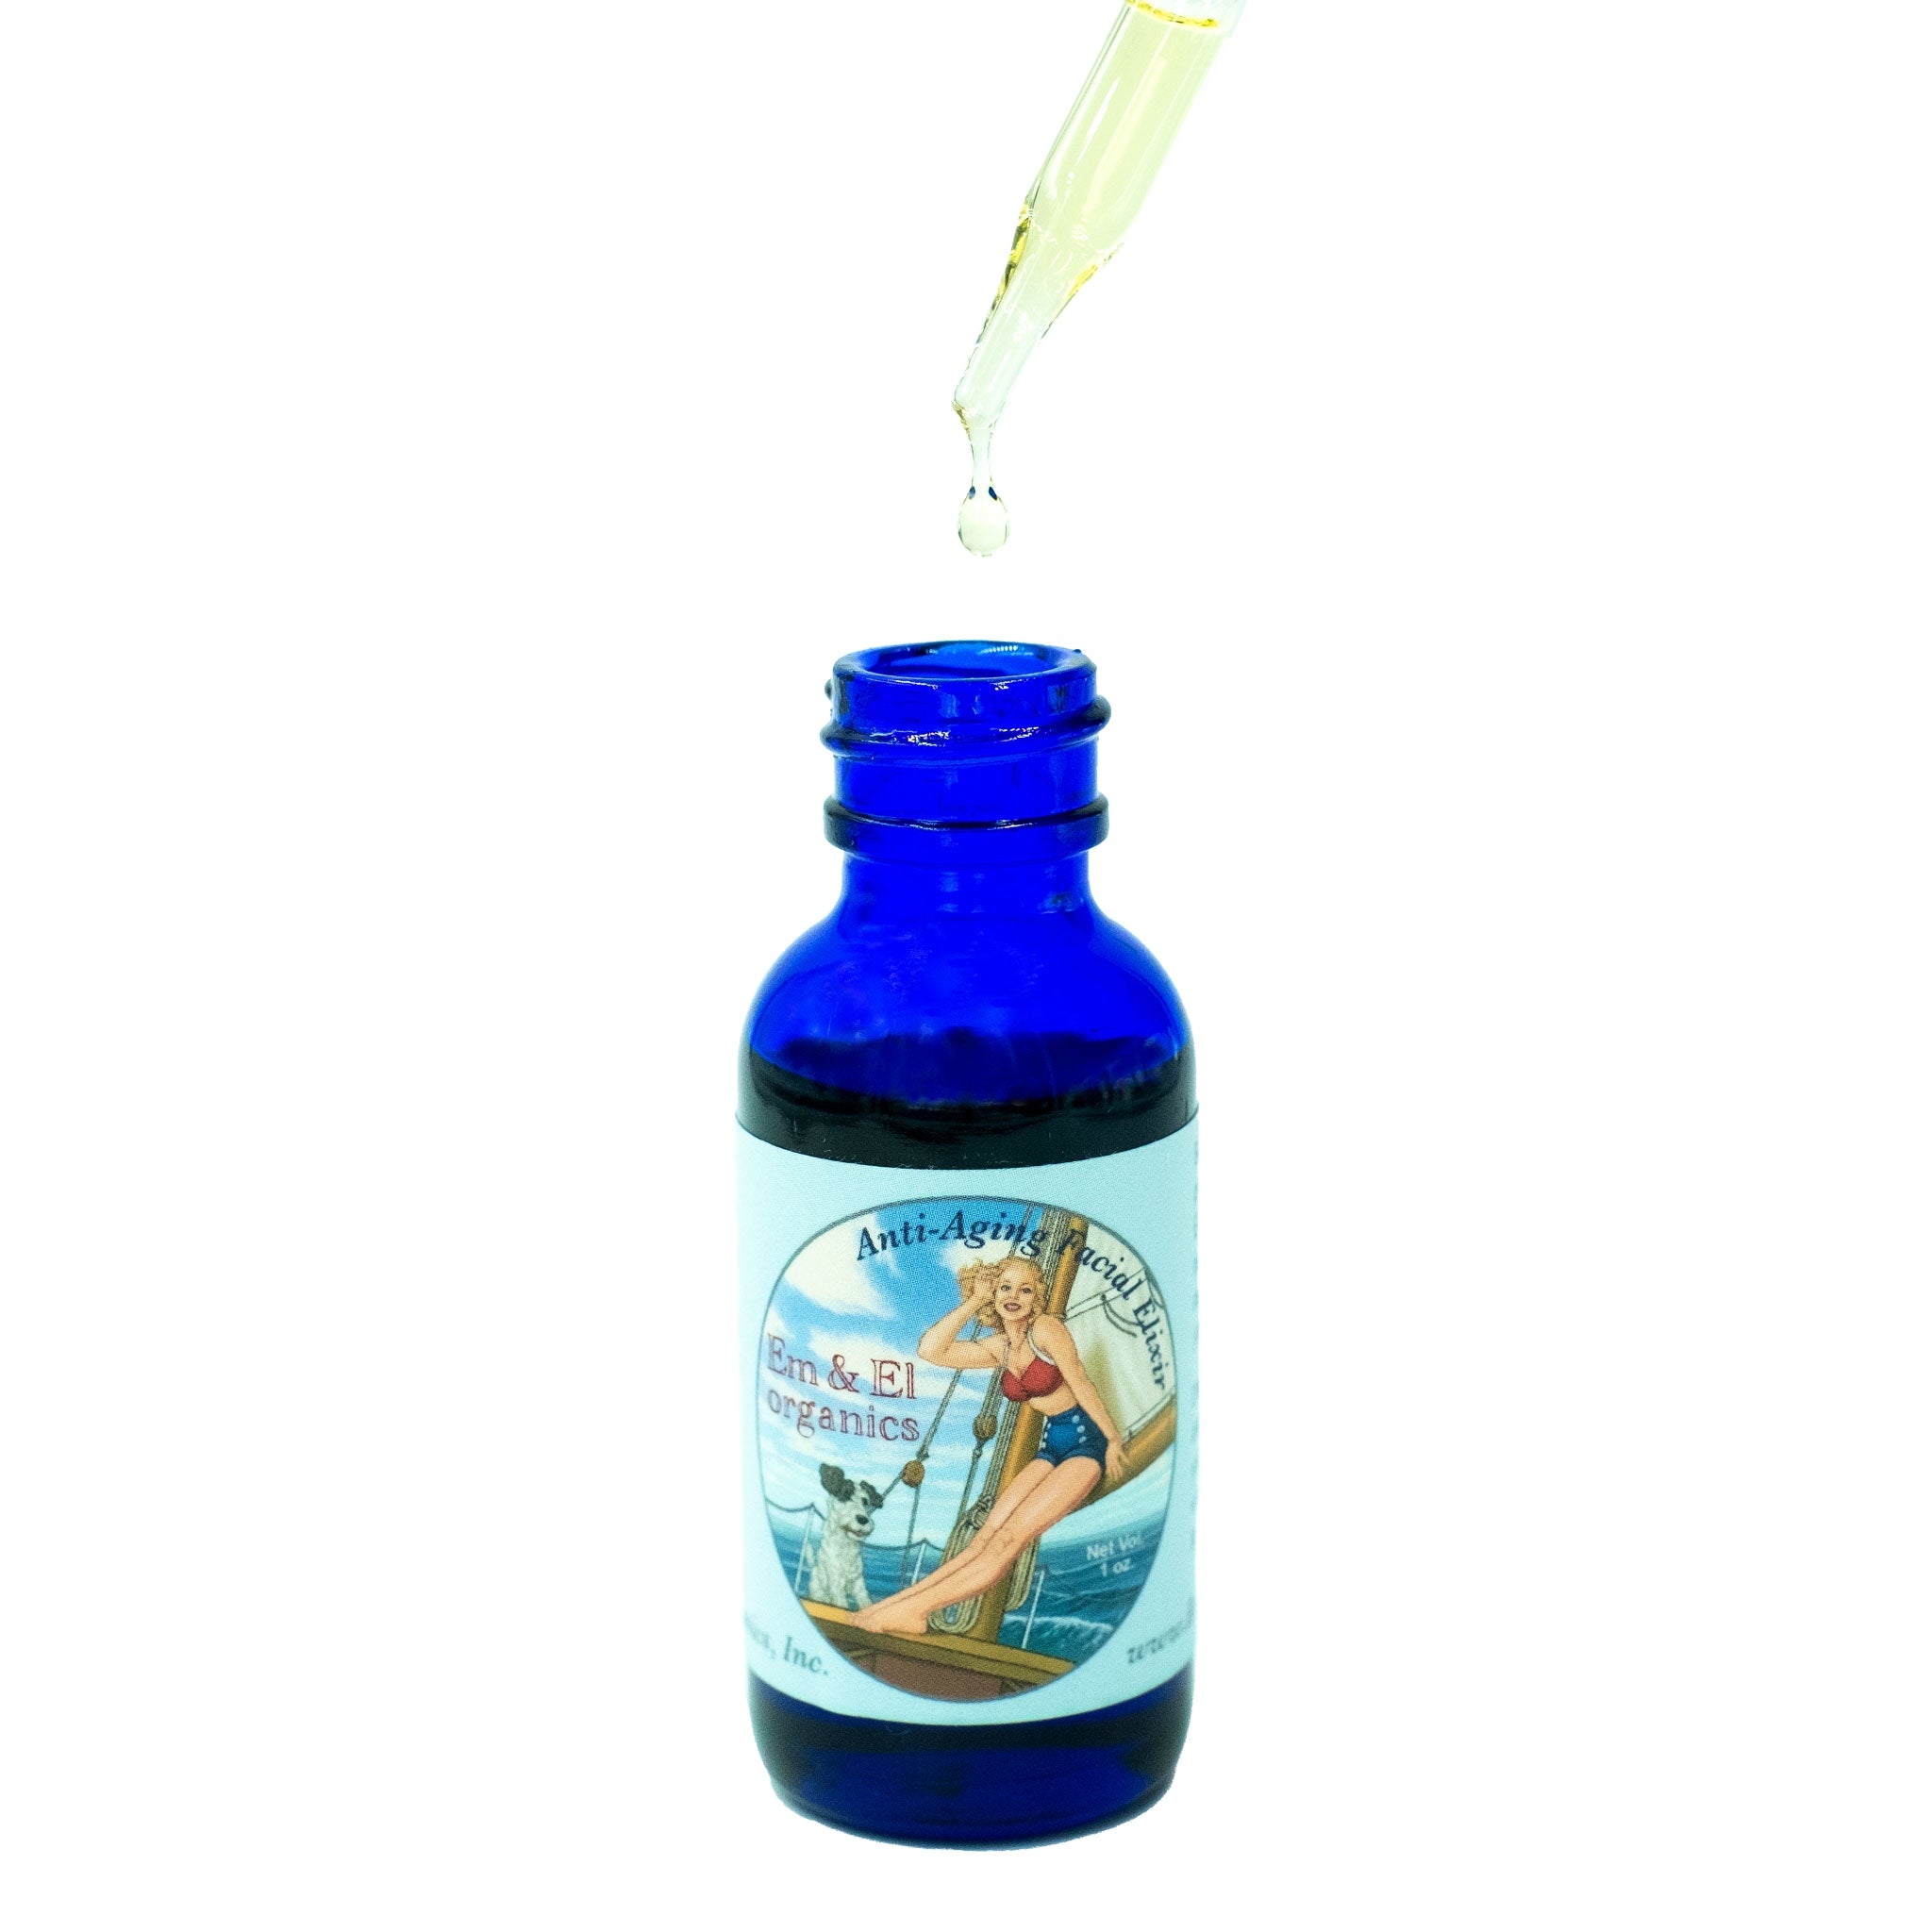 1 oz blue bottle with dropper top containing an organic anti-aging facial elixir